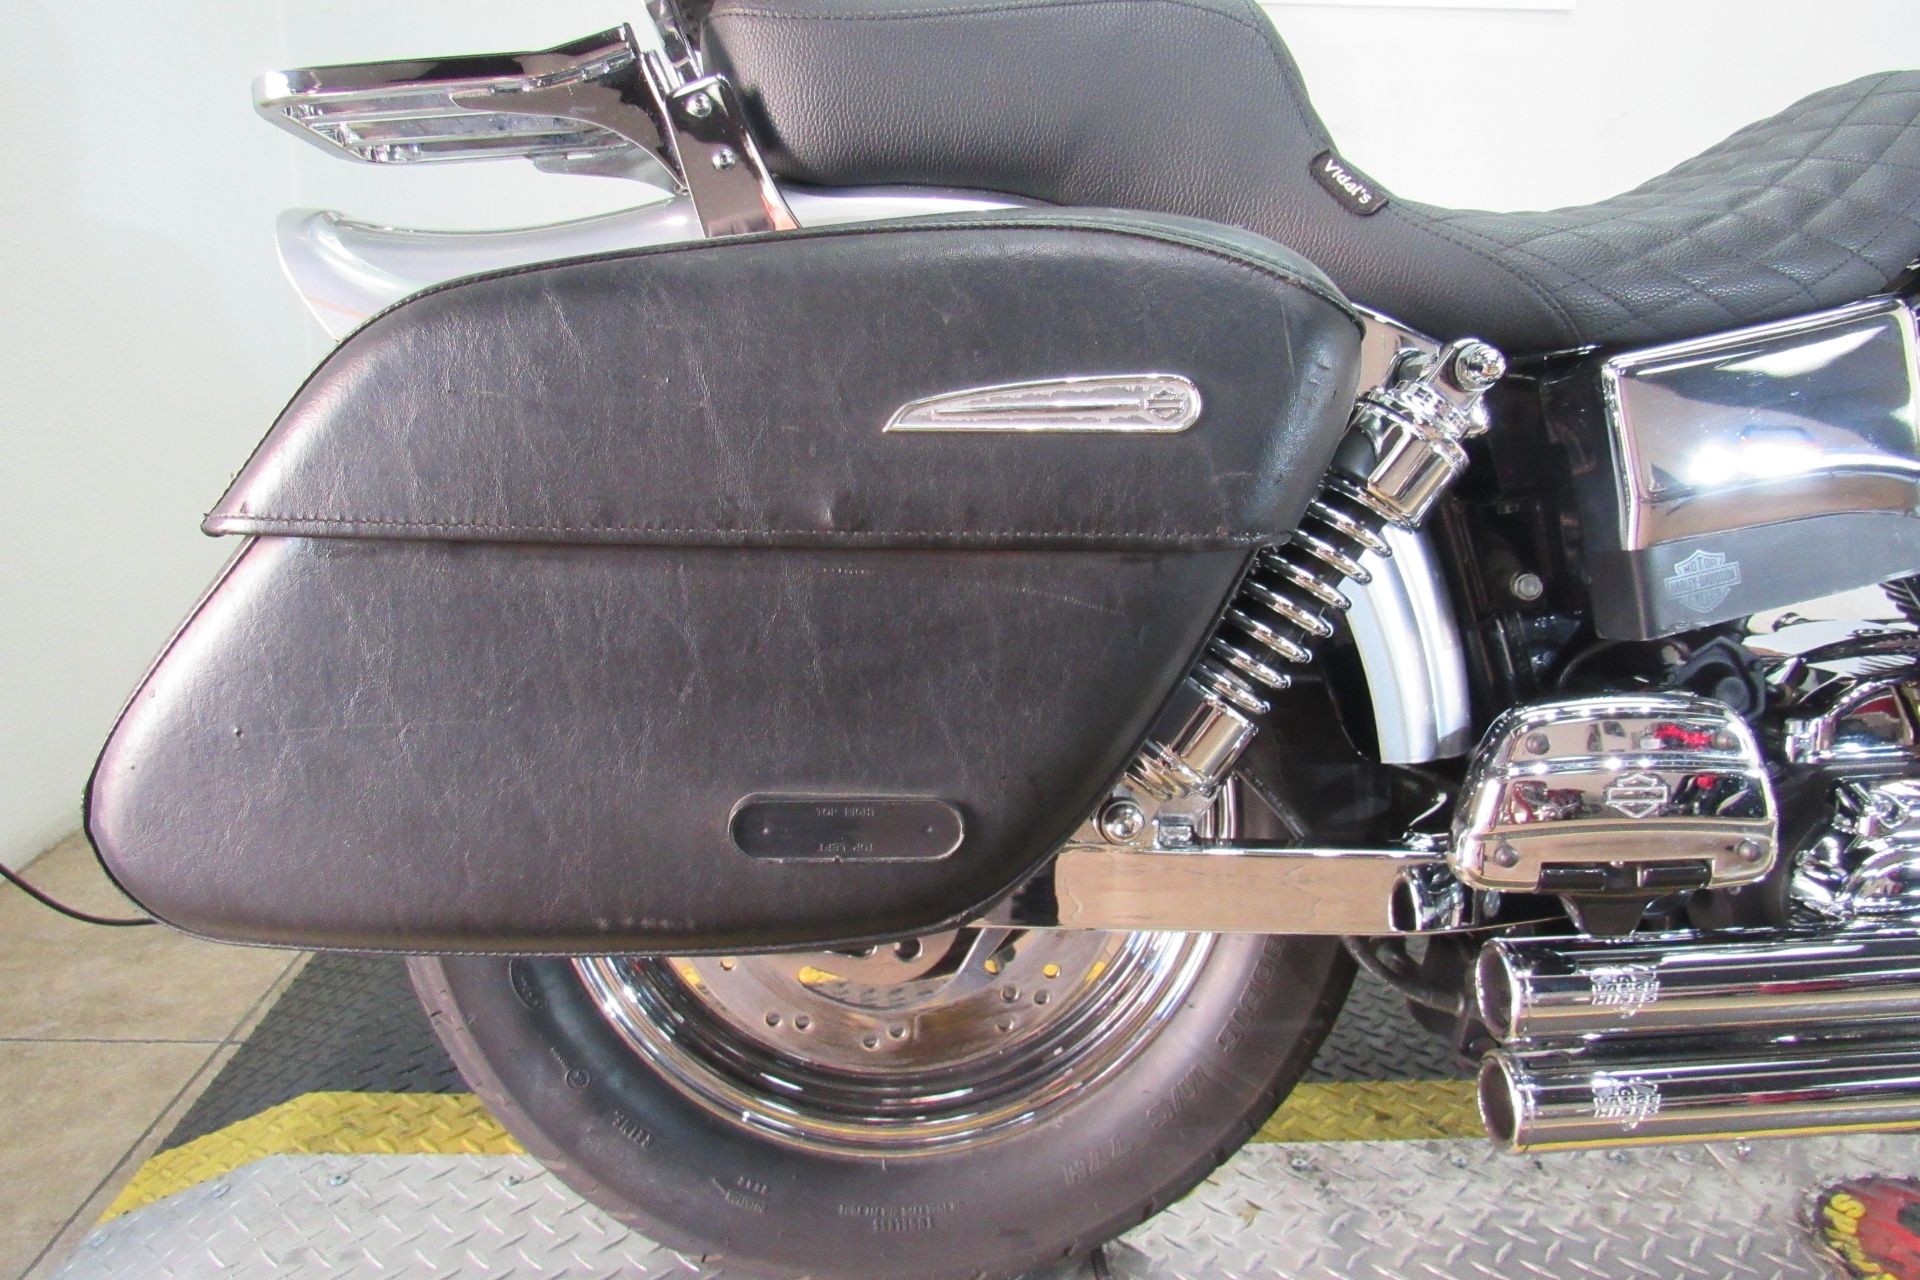 2003 Harley-Davidson FXDWG Dyna Wide Glide® in Temecula, California - Photo 30